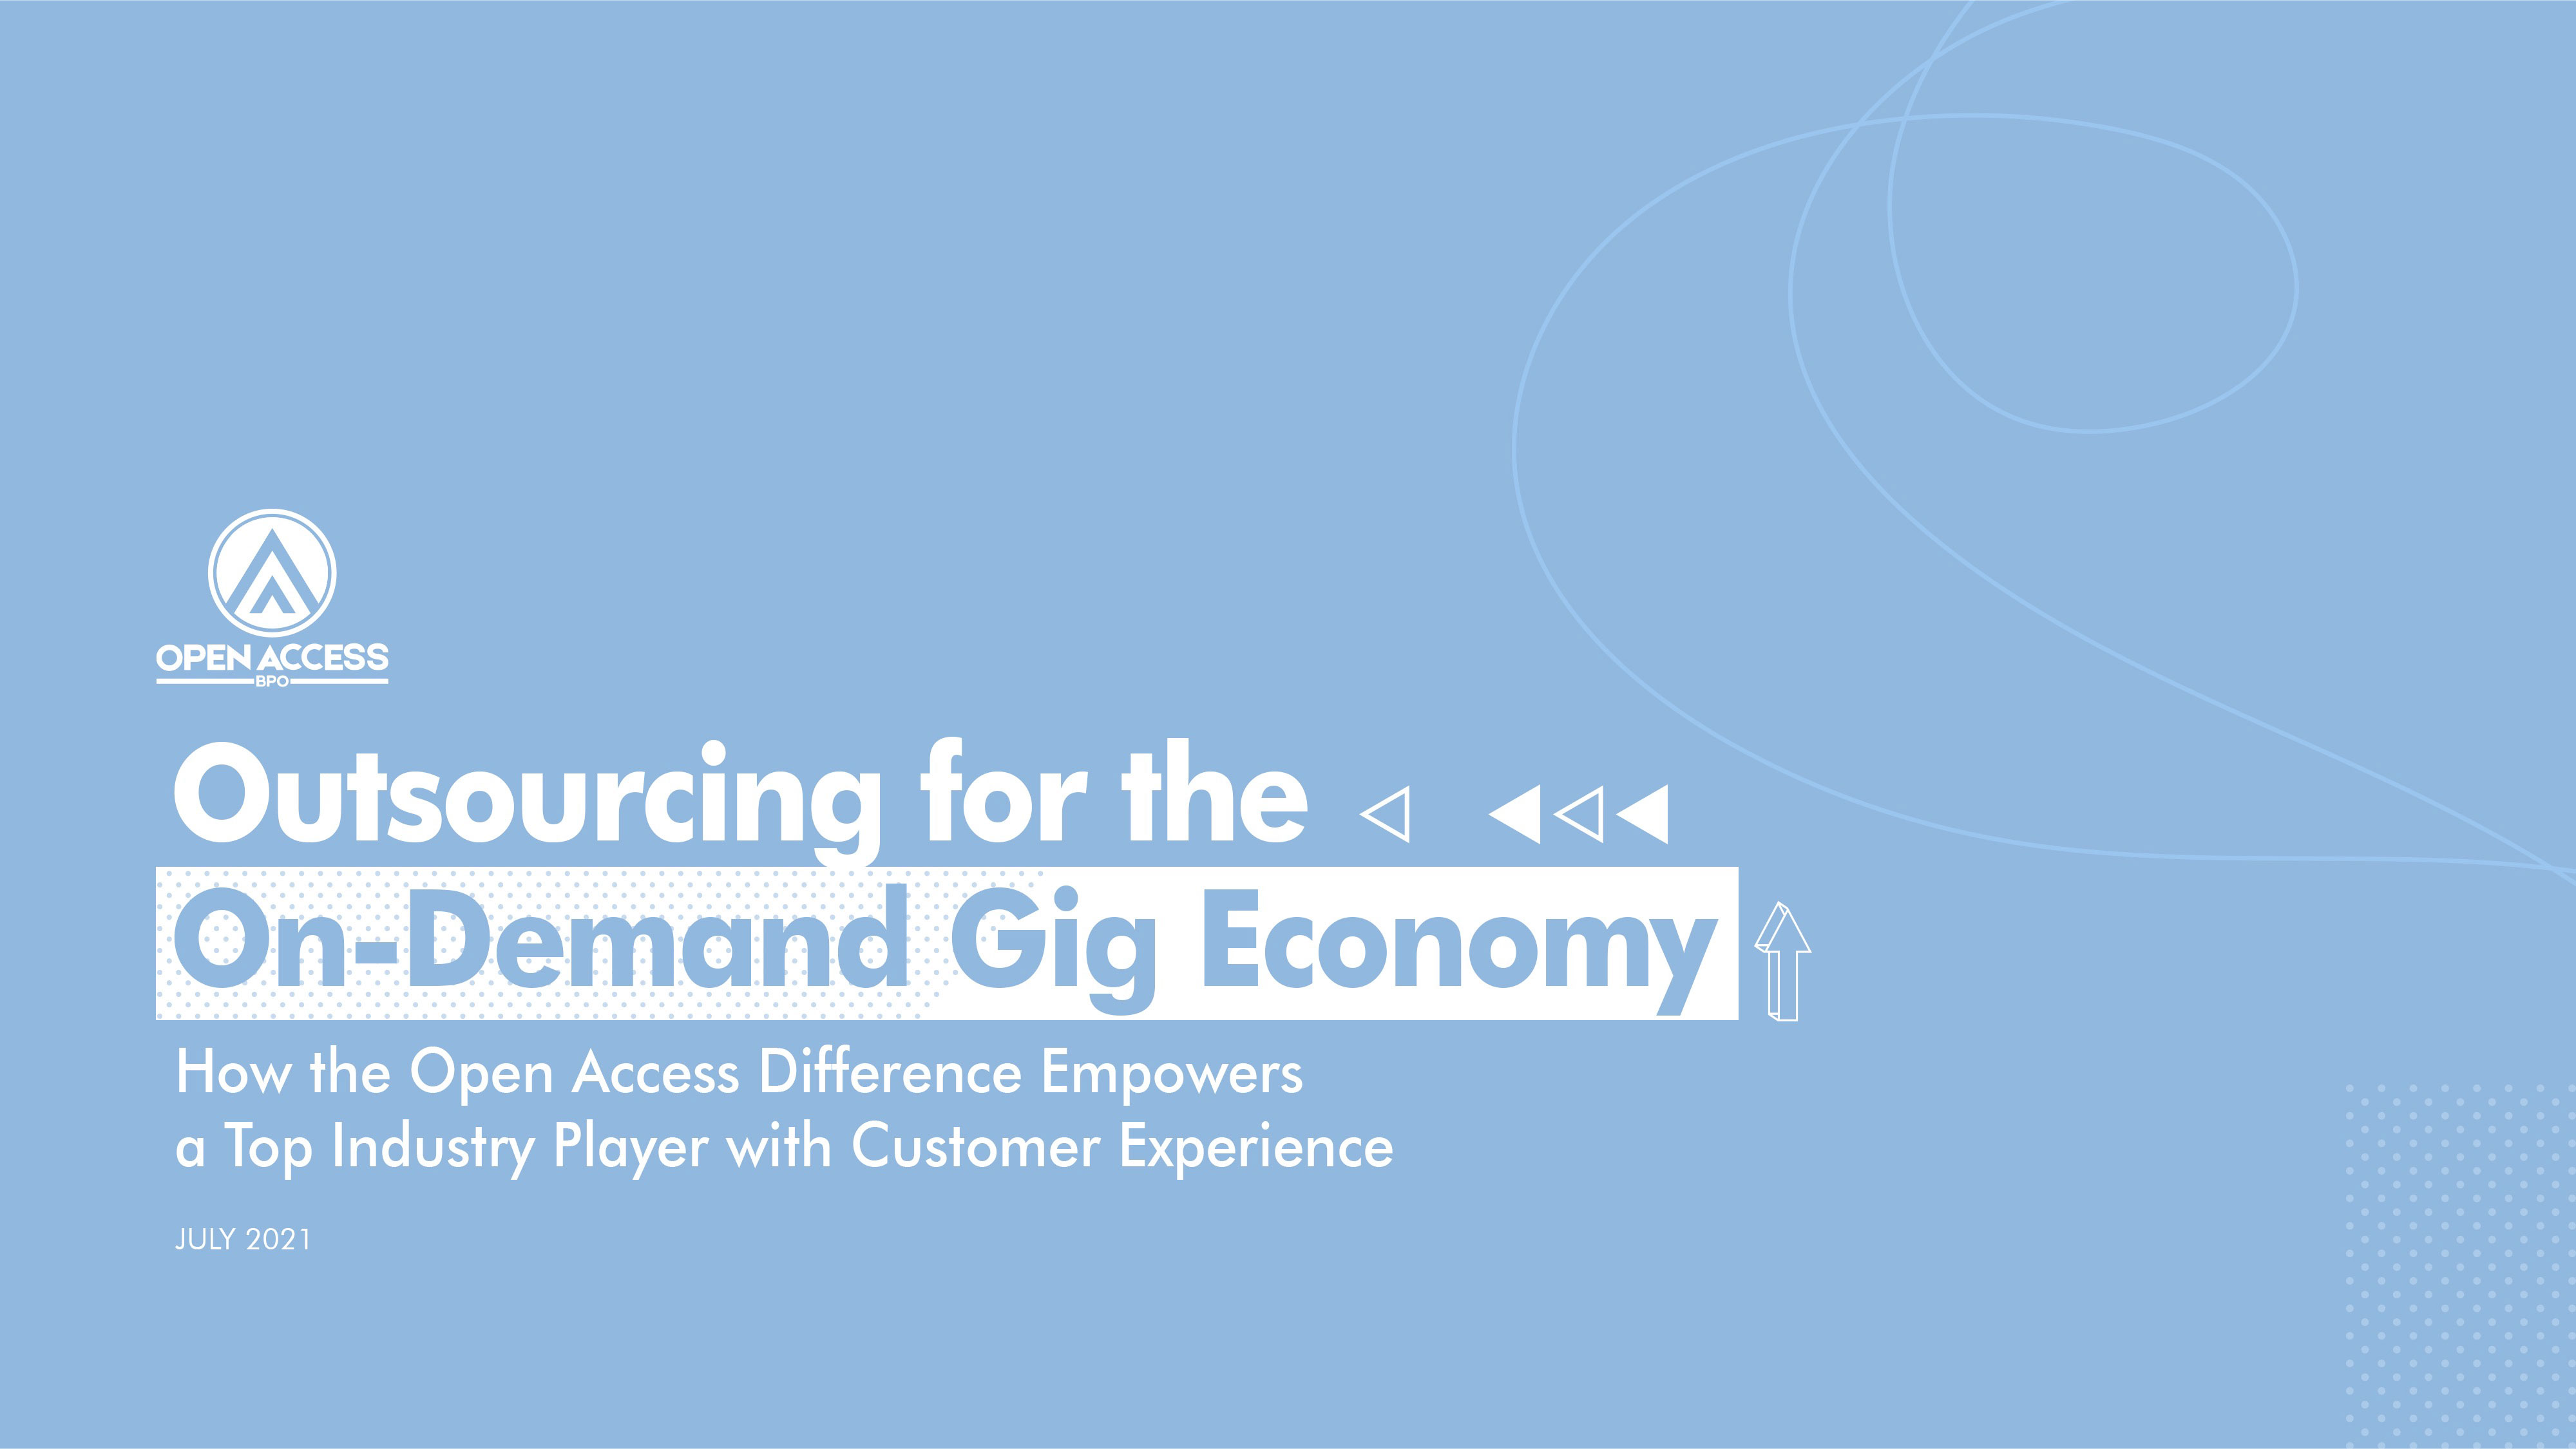 Open Access BPO Gig Economy outsourcing case study